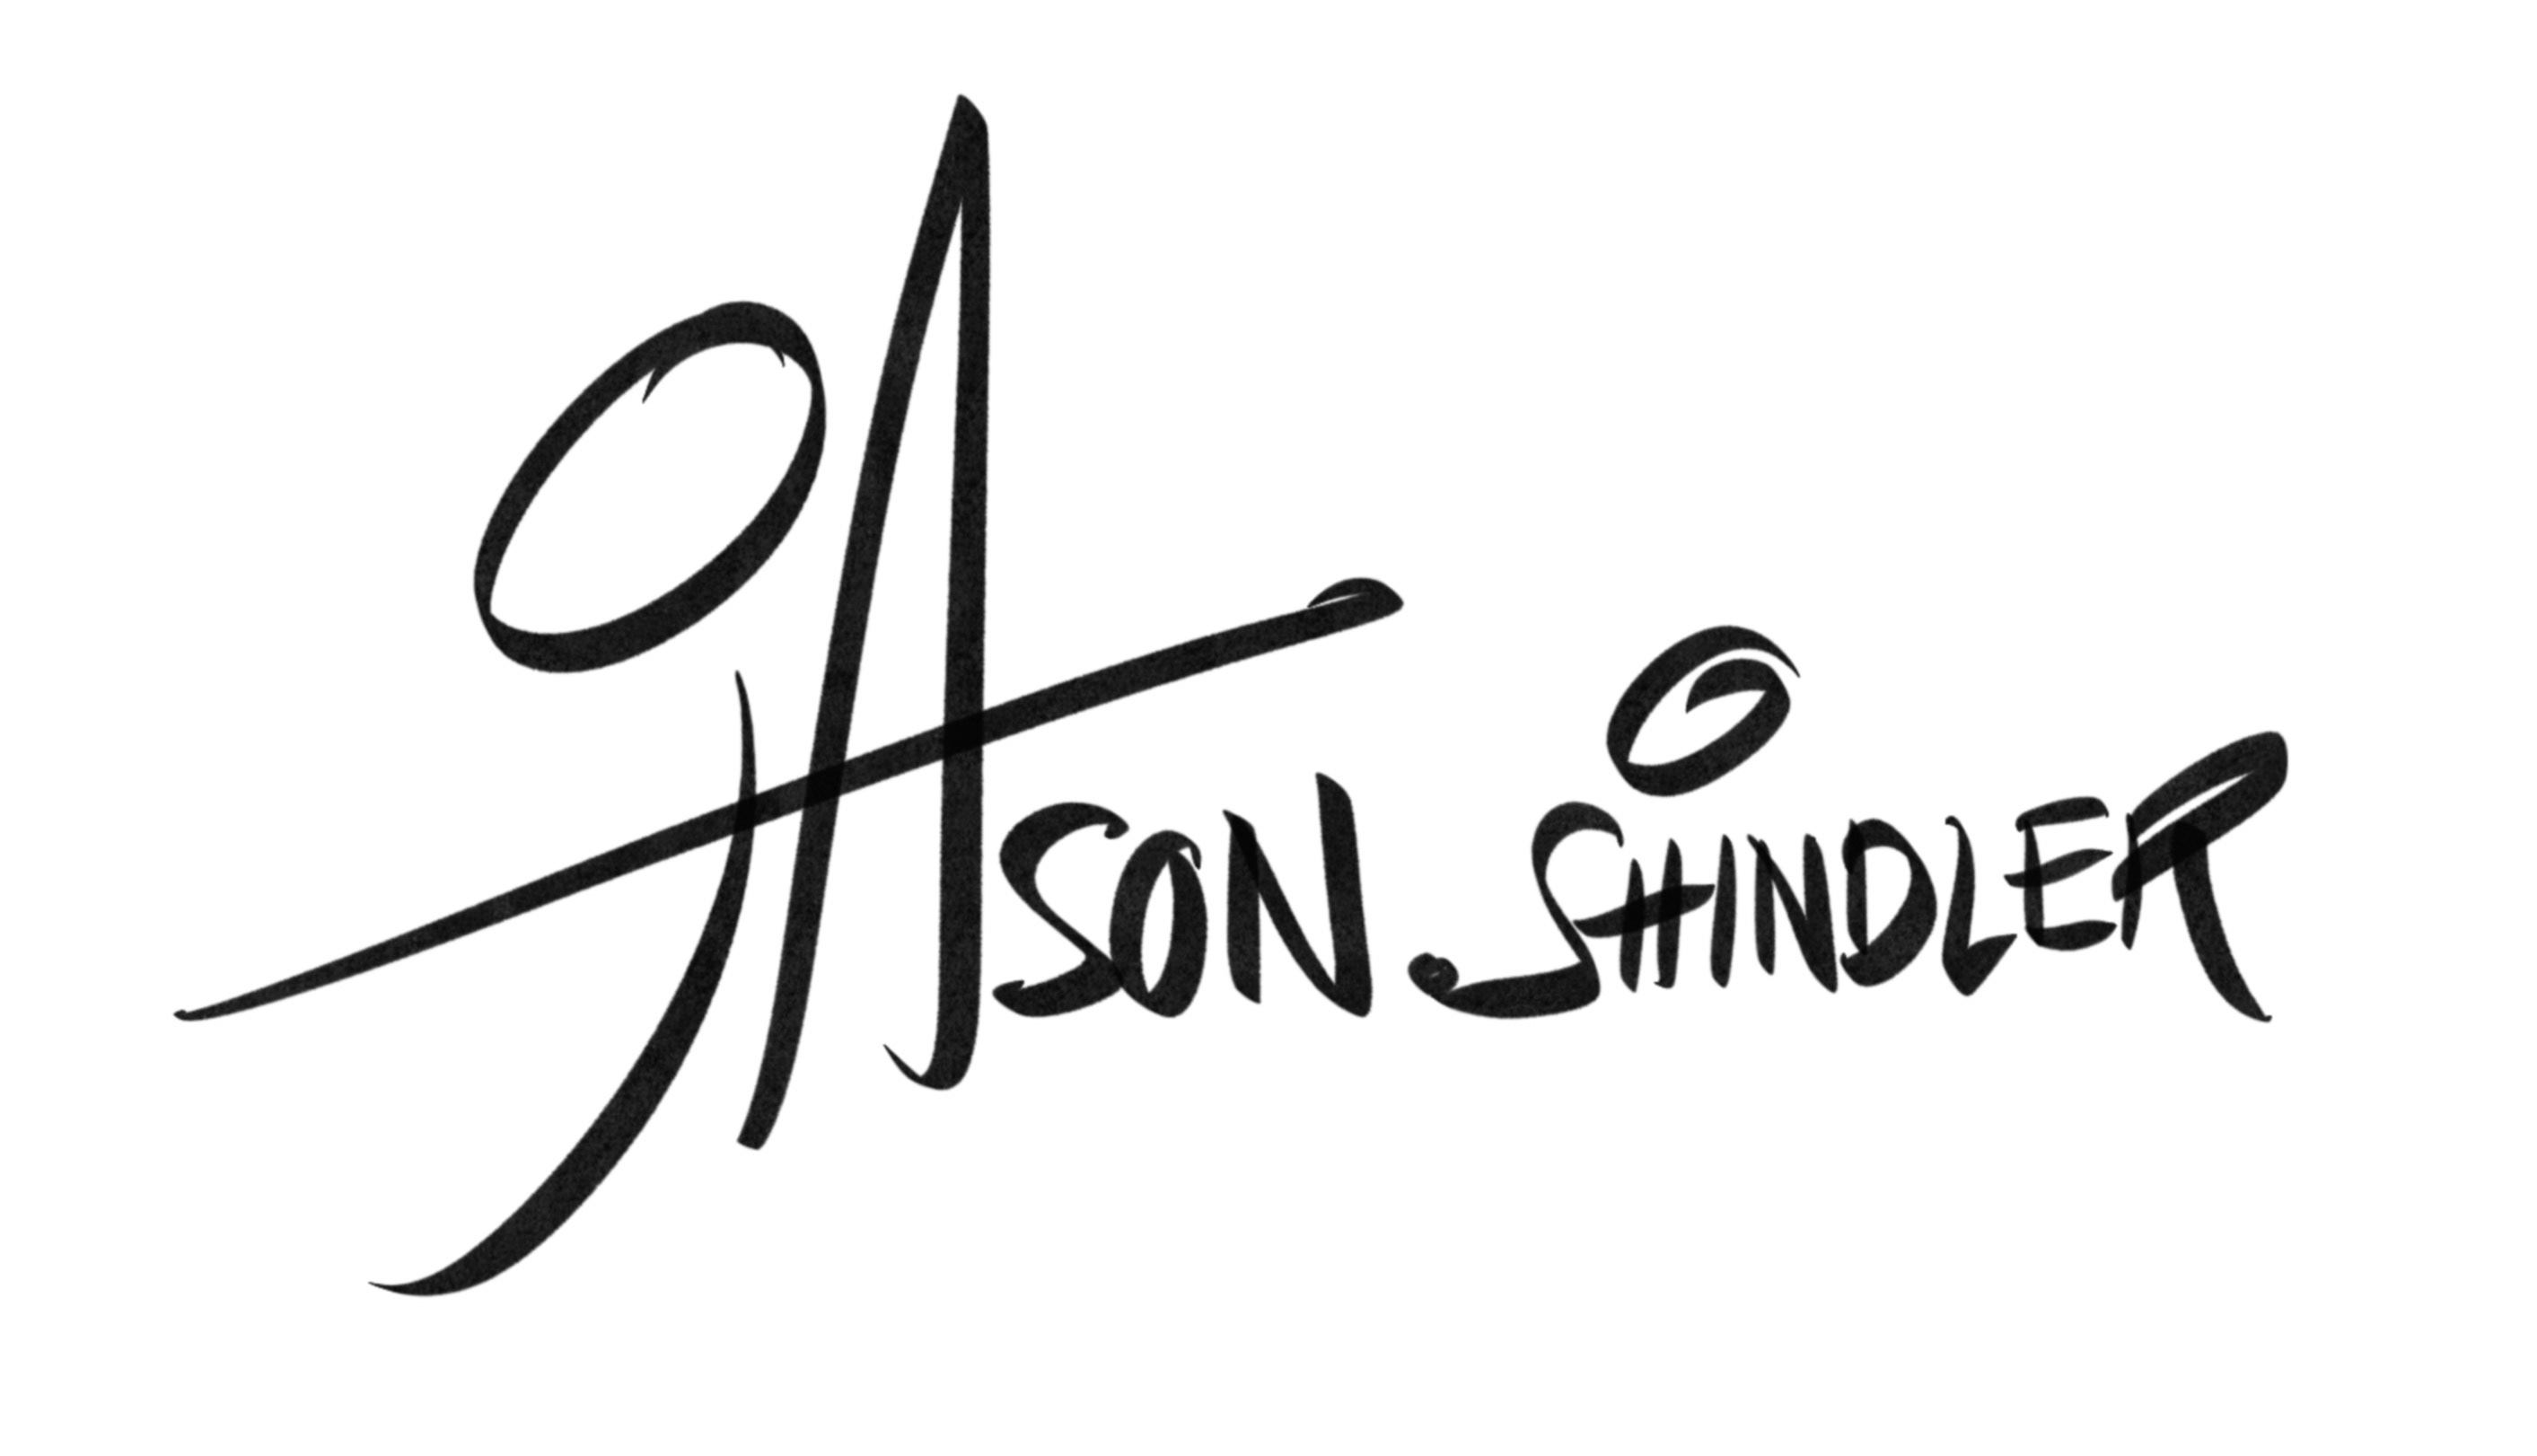 Jason Shindler